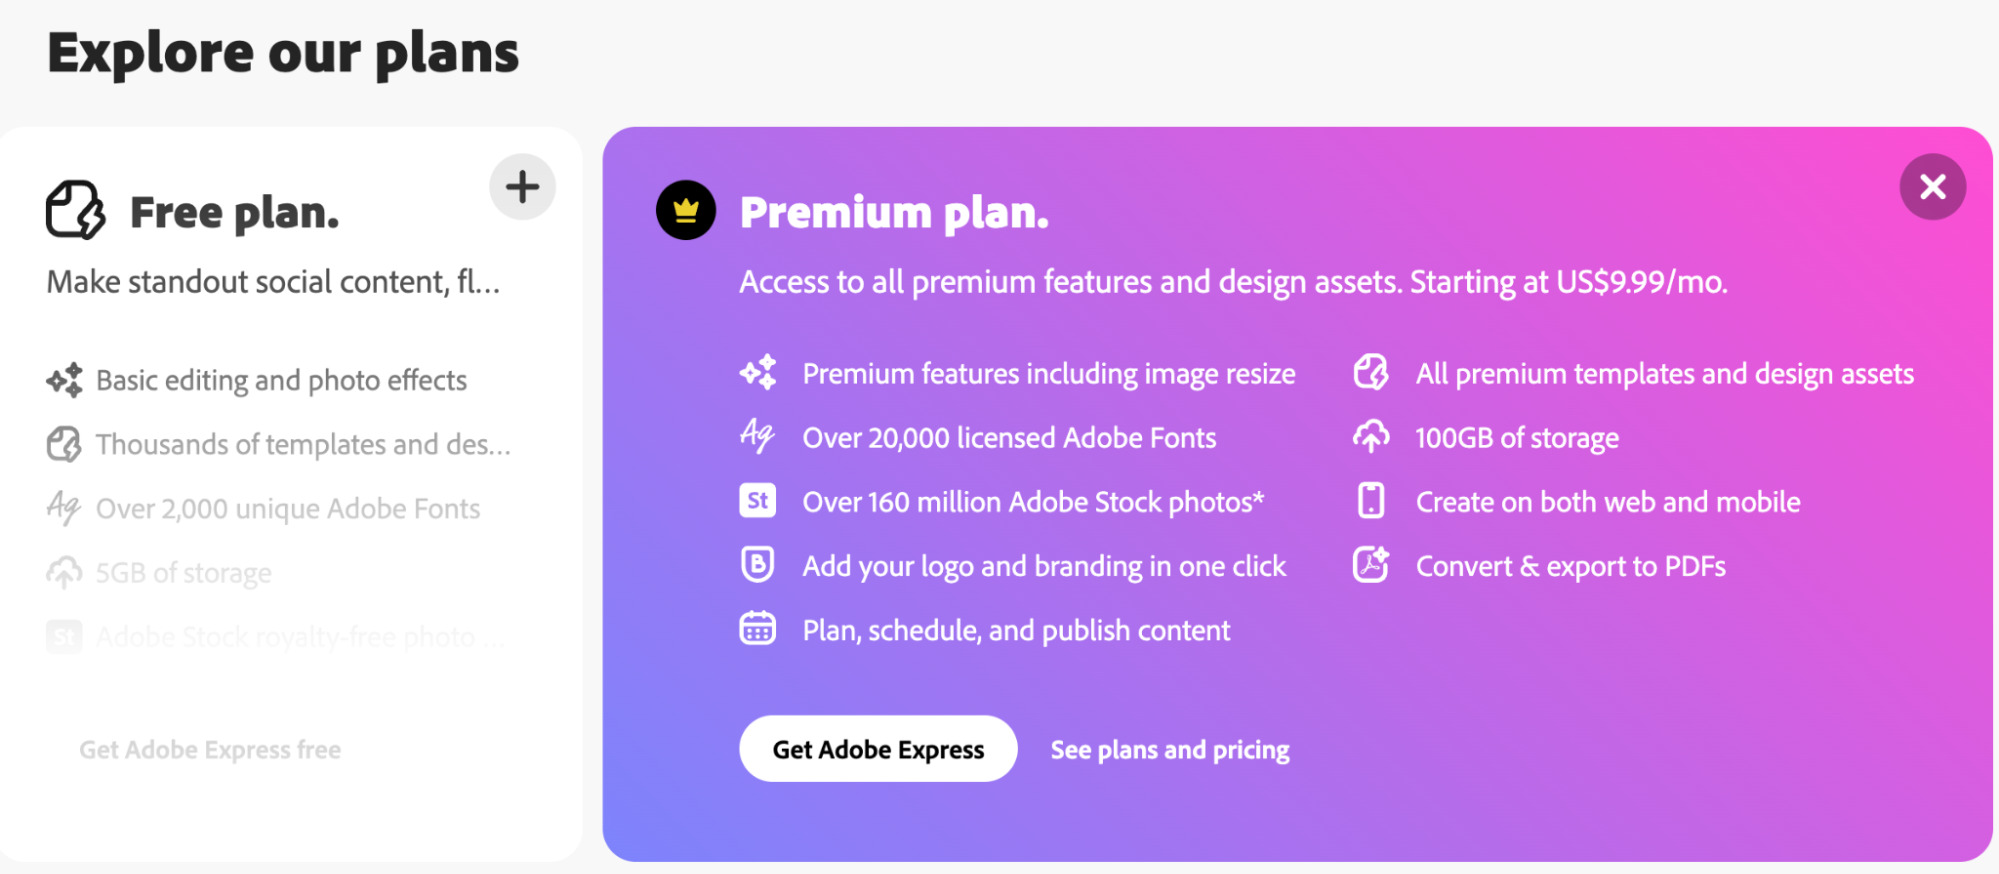 Adobe Express plans